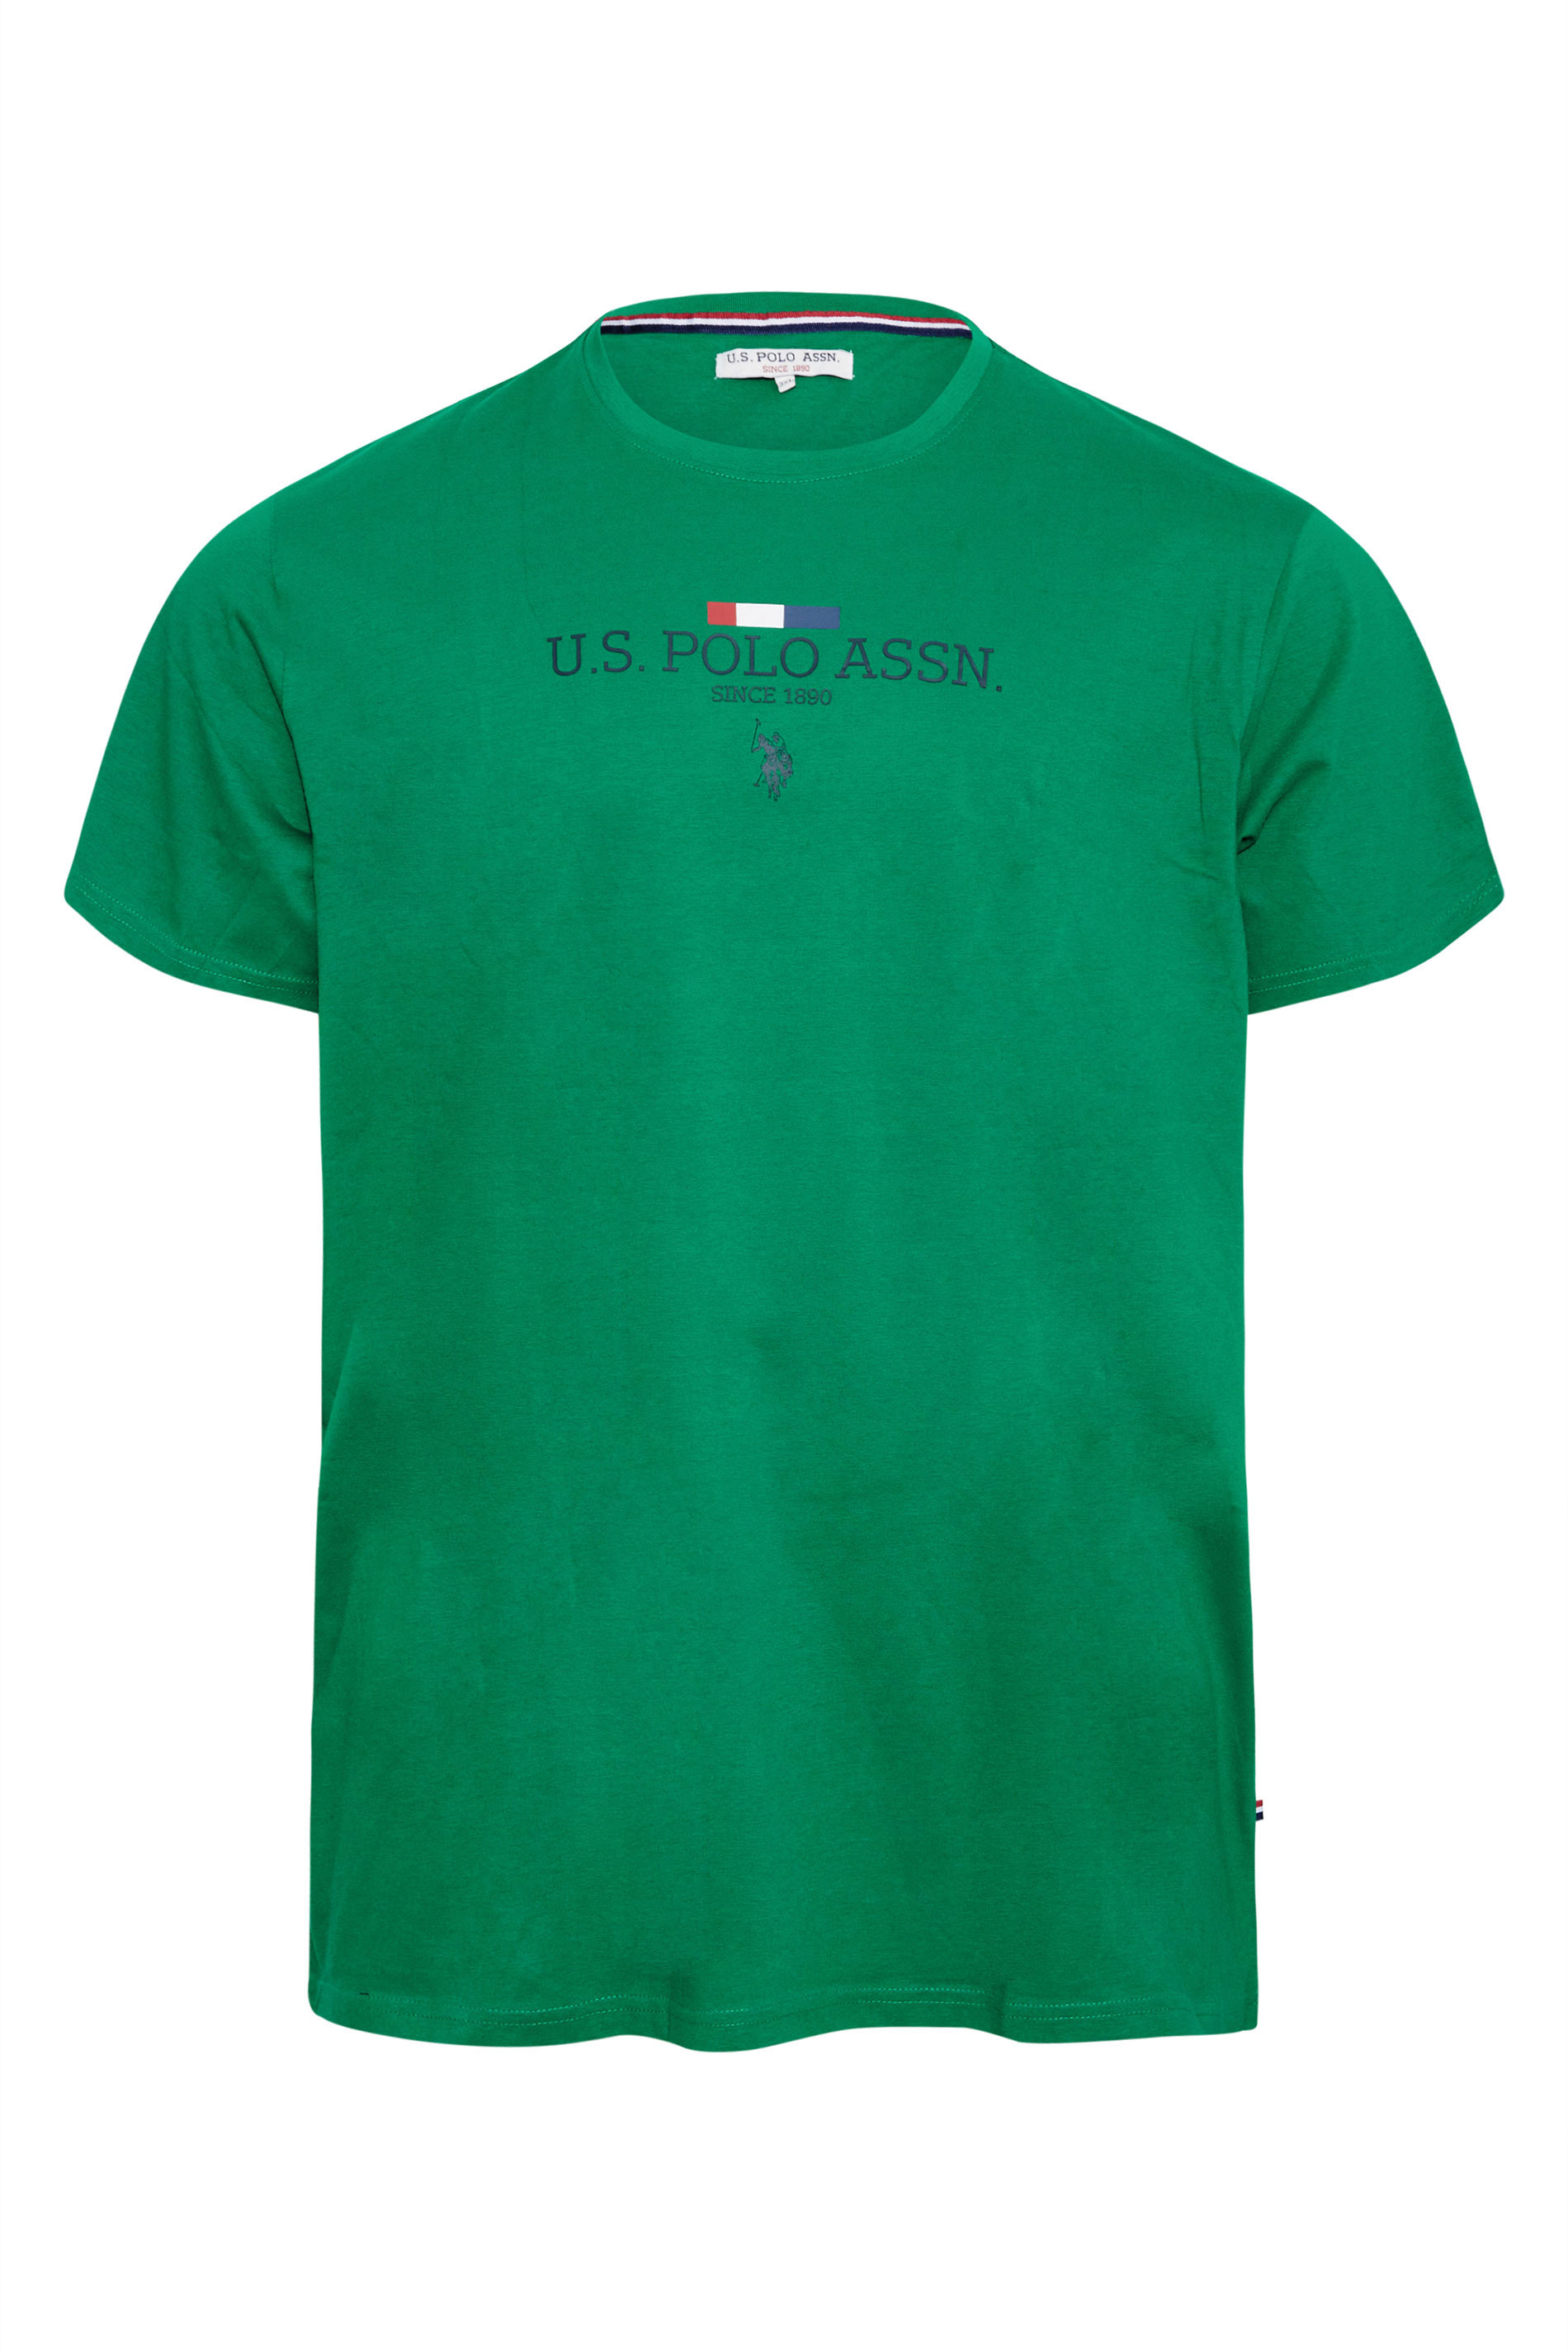 U.S. POLO ASSN. Green Heritage T-Shirt | BadRhino 3